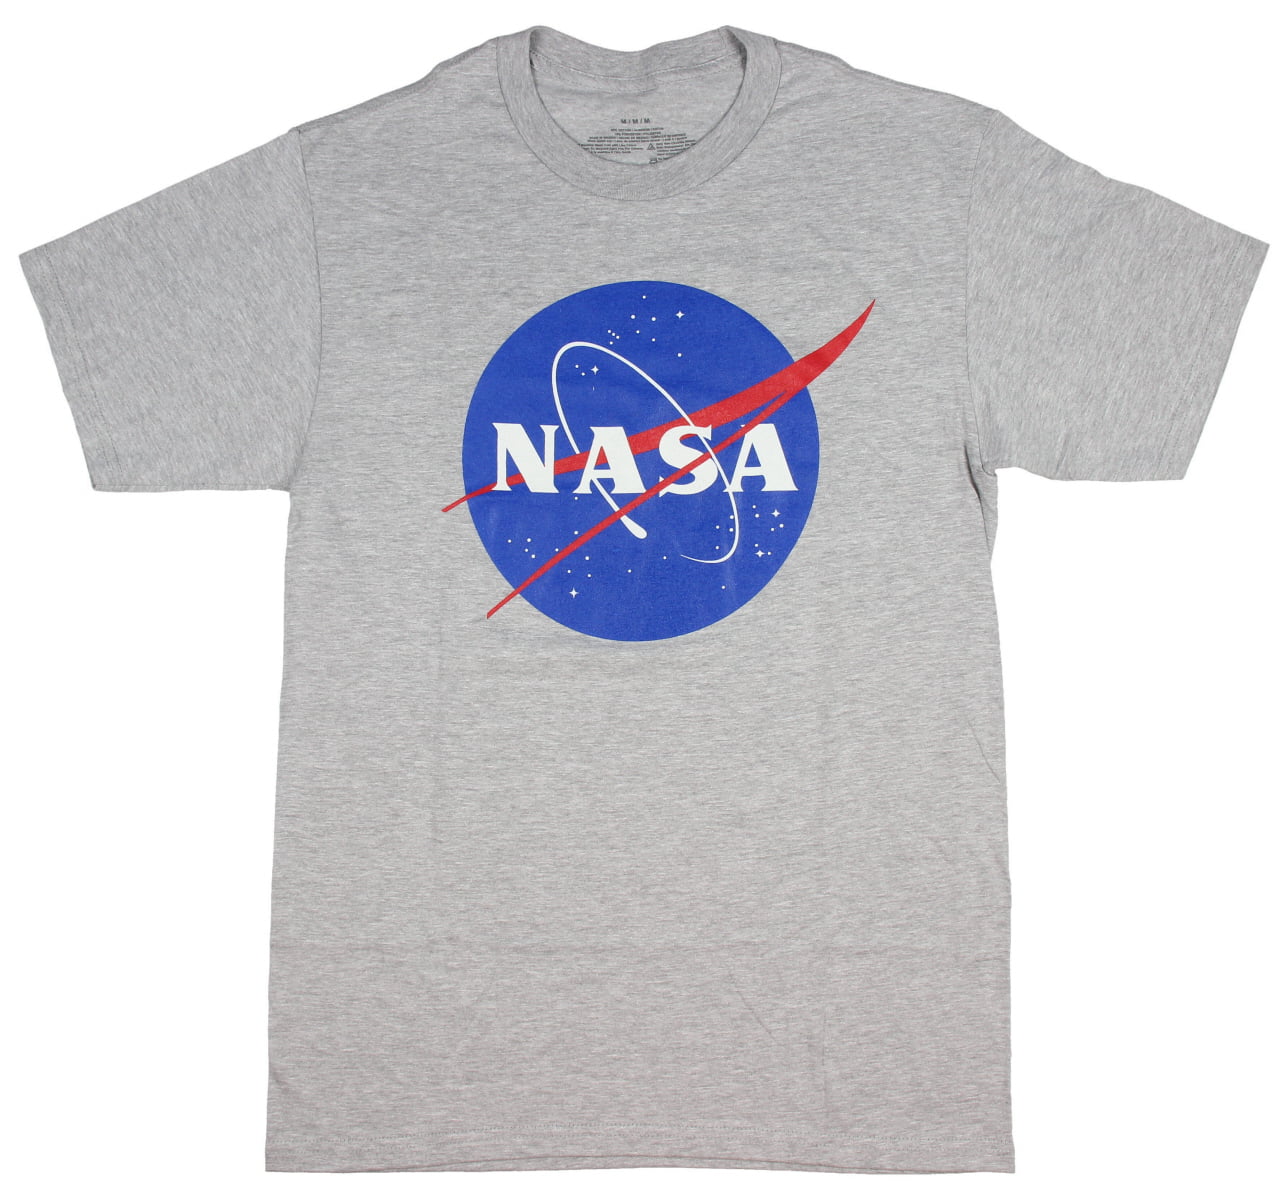 NASA - NASA Shirt Men's Front Graphic Logo Space Tee (Grey, Medium ...